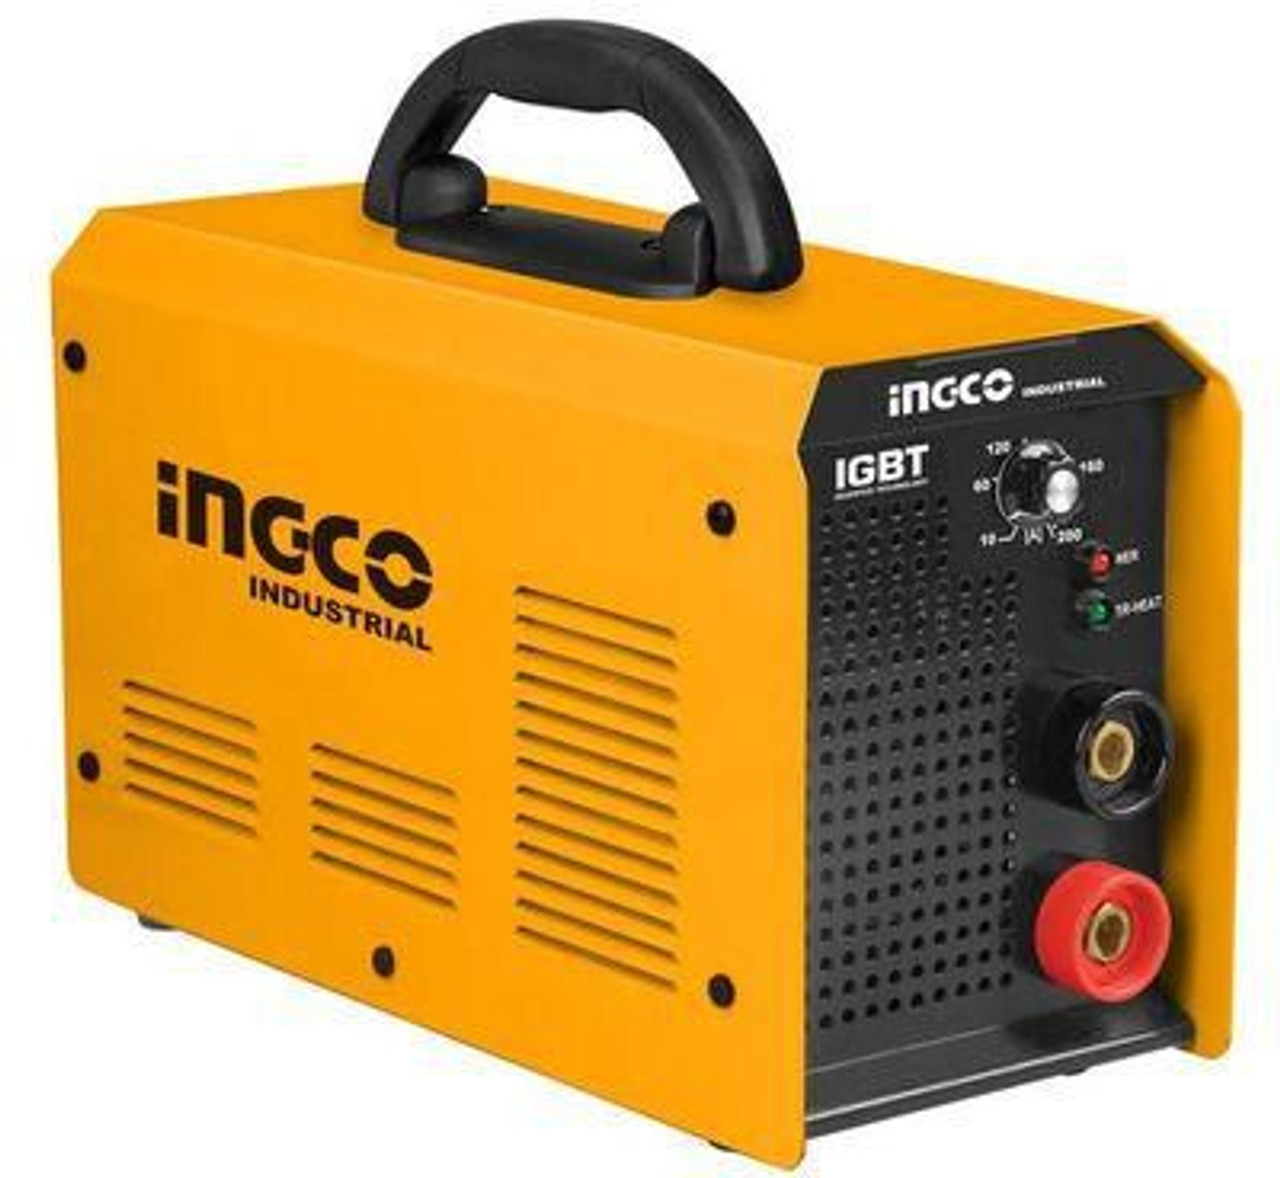 Ingco Arc Welding machine